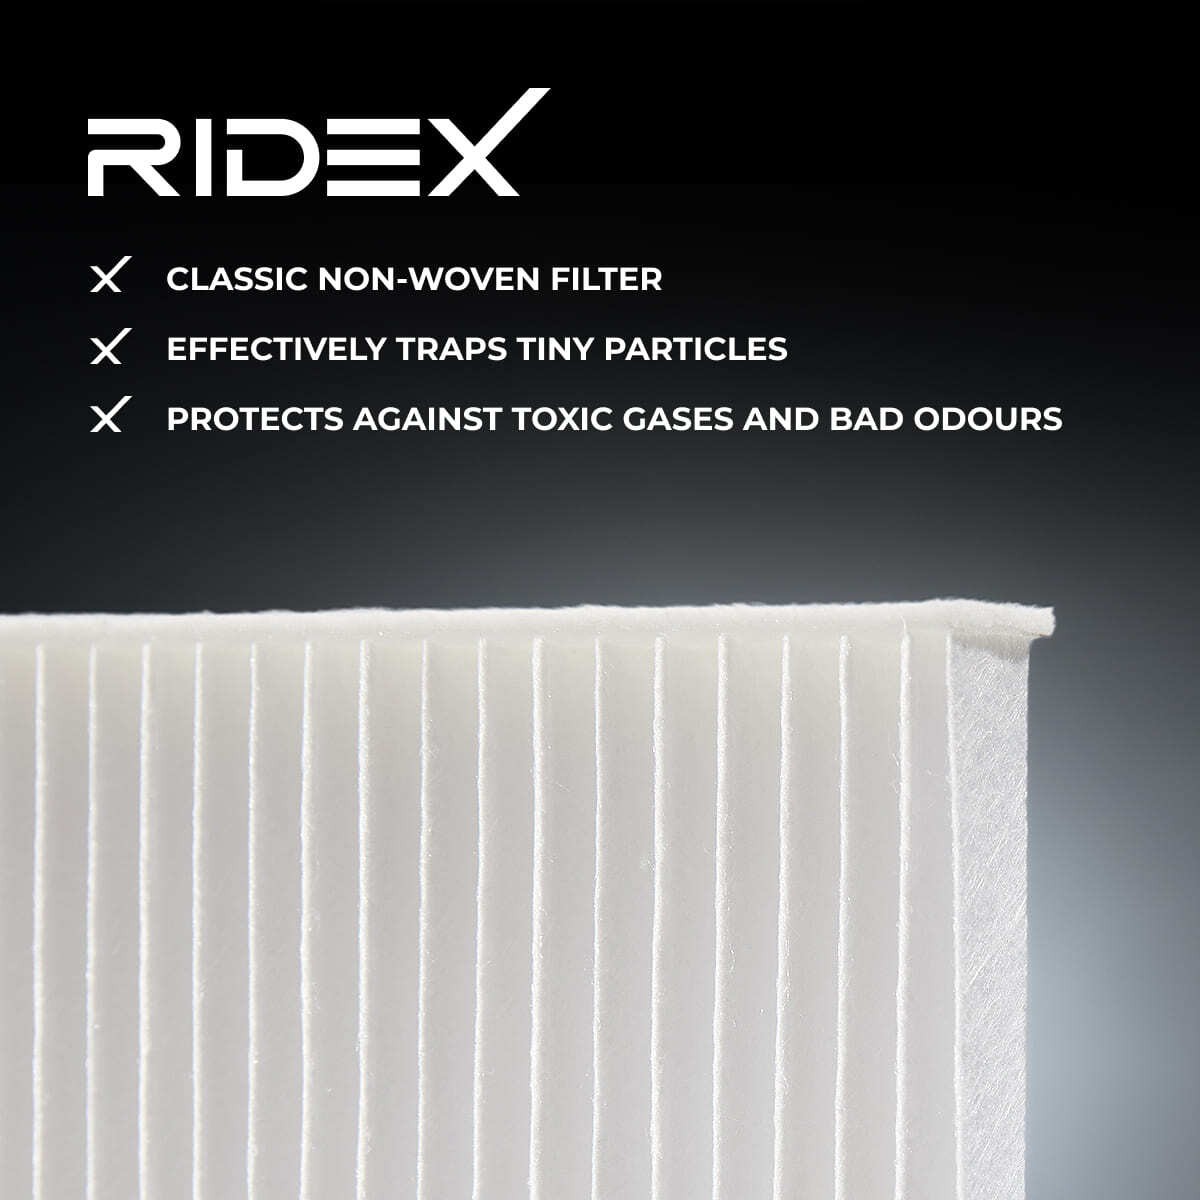 424I0312 Air con filter 424I0312 RIDEX Pollen Filter, Particulate Filter, 122 mm x 114 mm x 10 mm